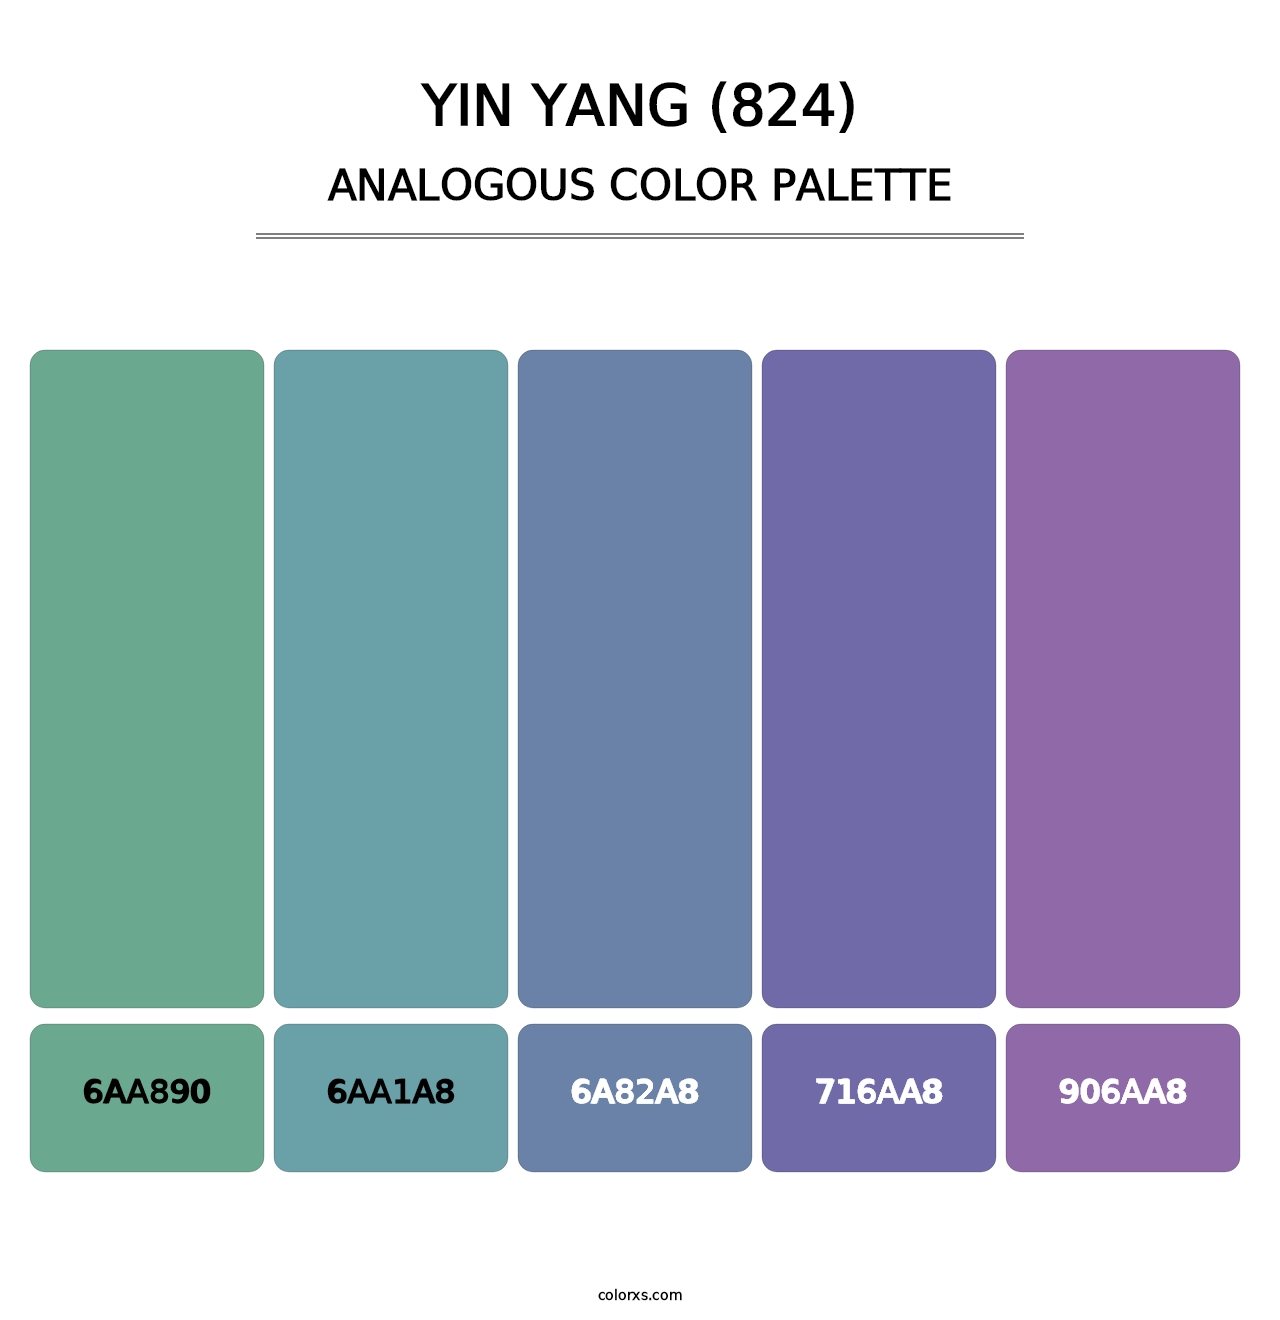 Yin Yang (824) - Analogous Color Palette